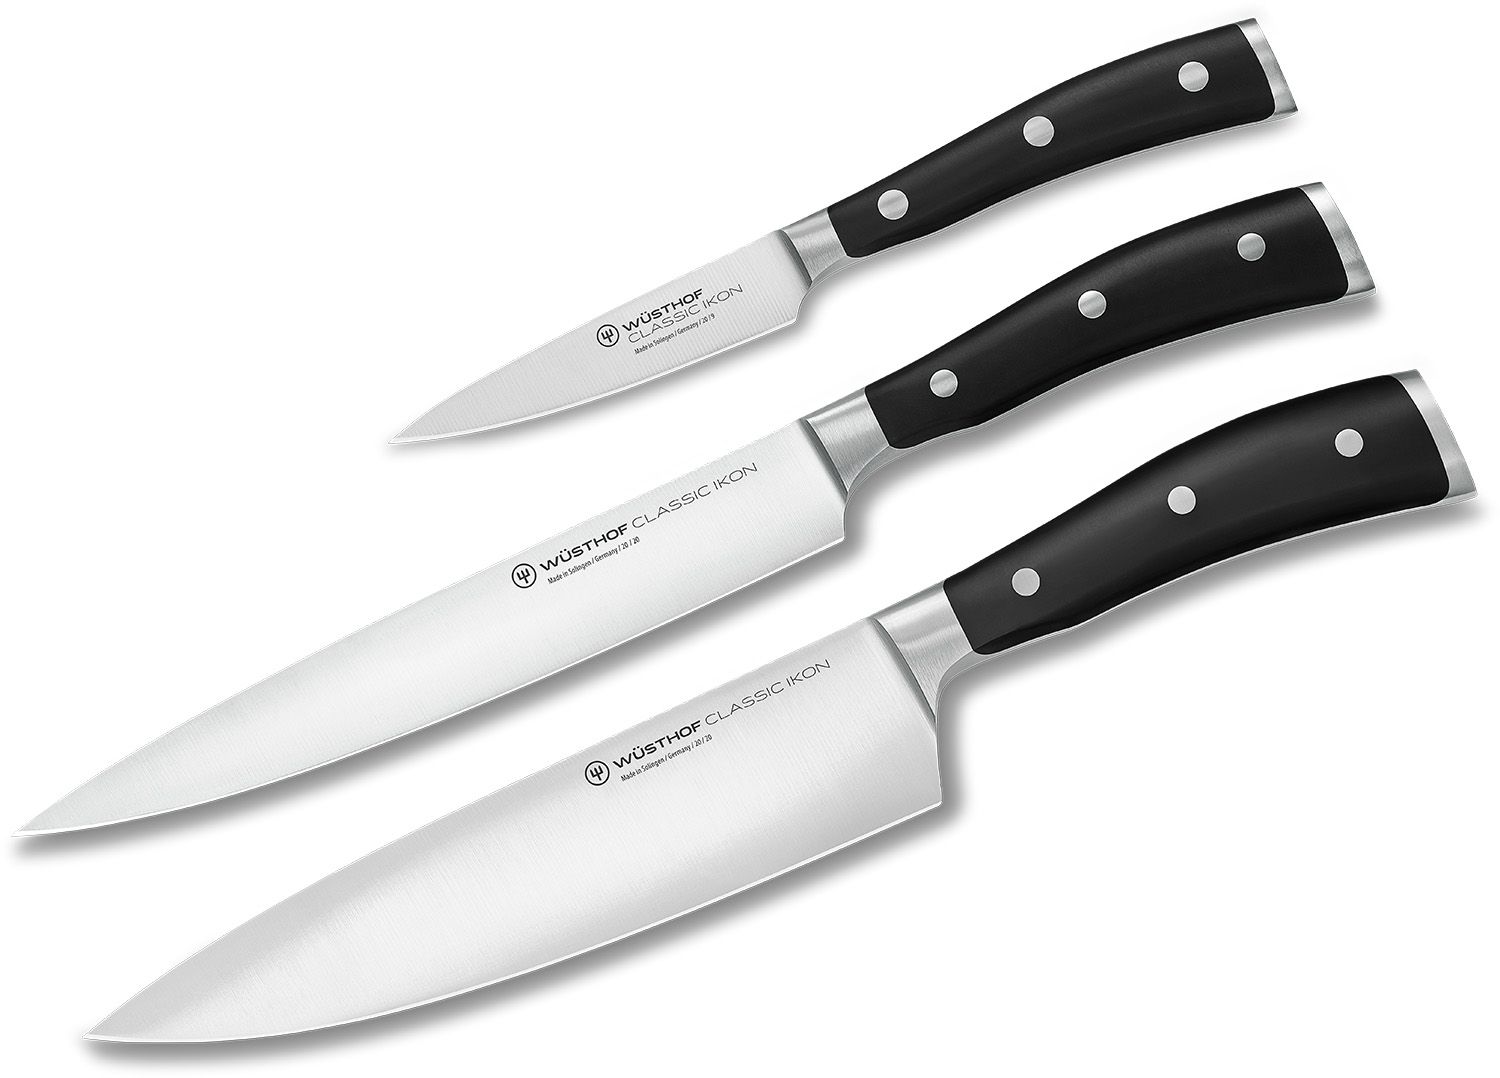 https://pics.knifecenter.com/knifecenter/wusthof-cutlery/images/WU1120360301_1a.jpg